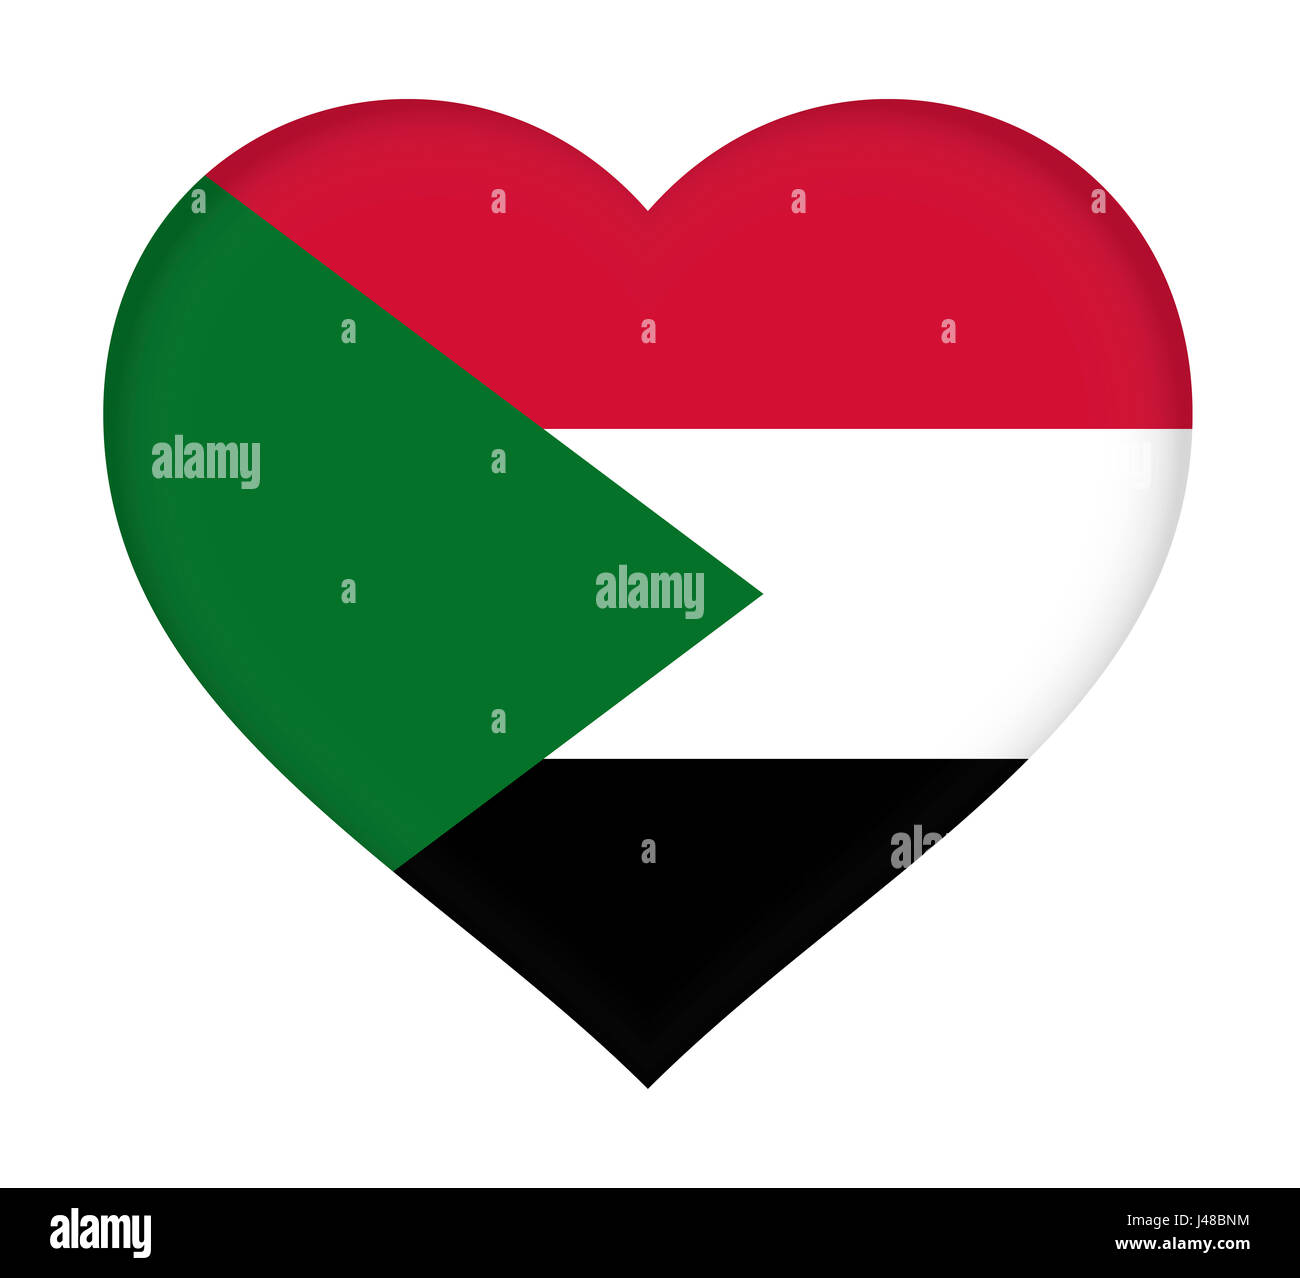 Illustration of the flag of Sudan shaped like a heart. Stock Photo